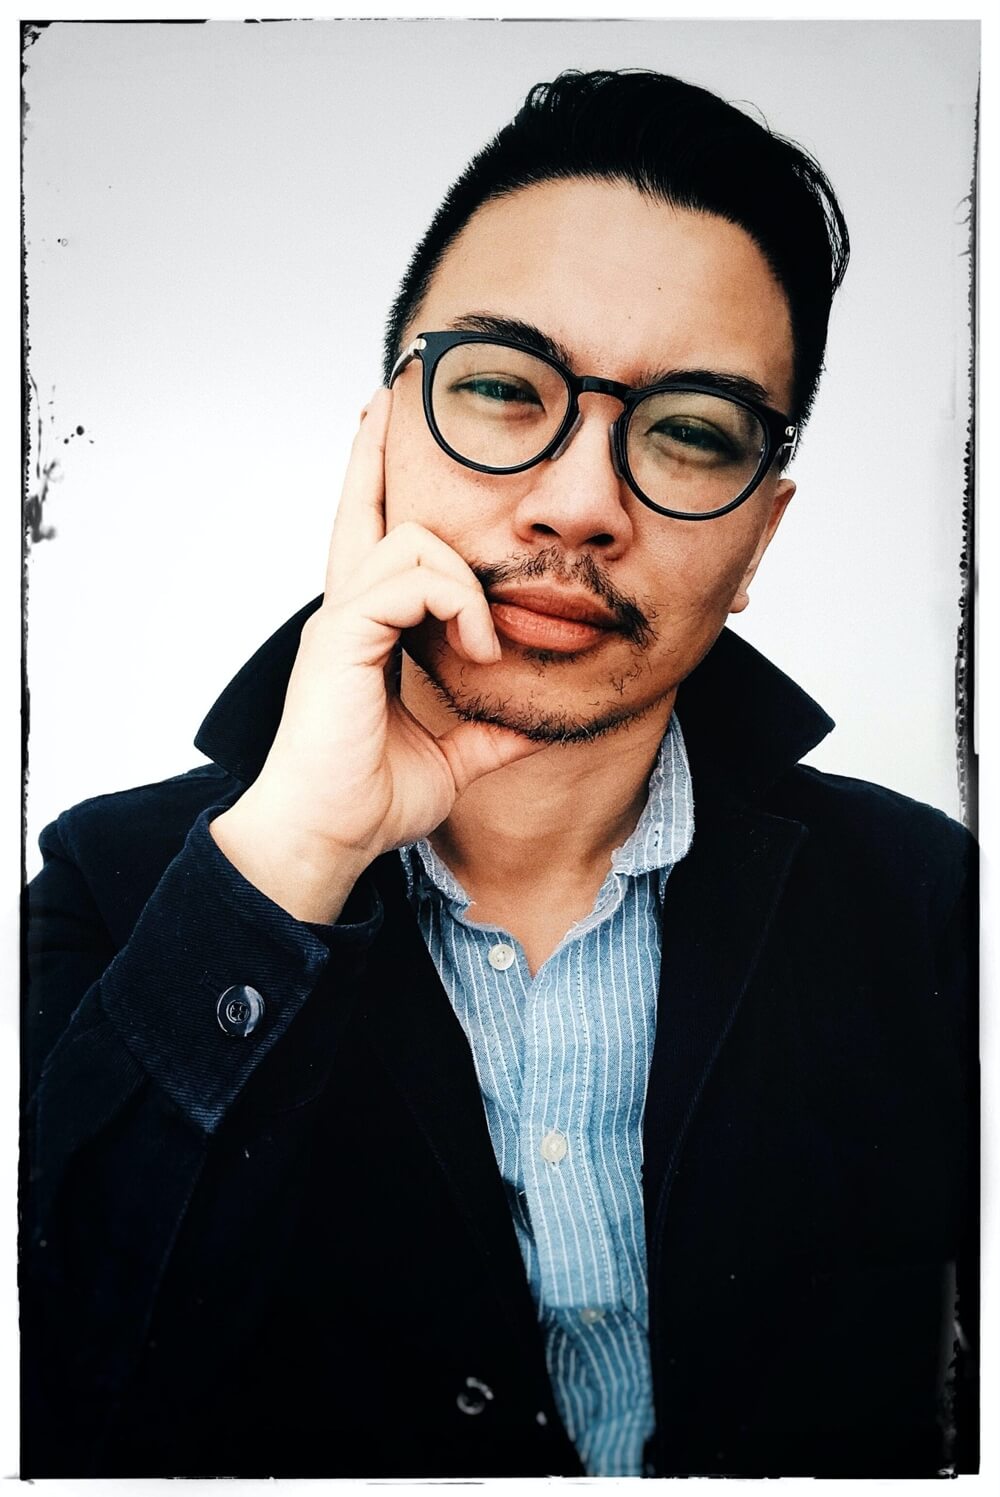 Personal stylist Peter Nguyen